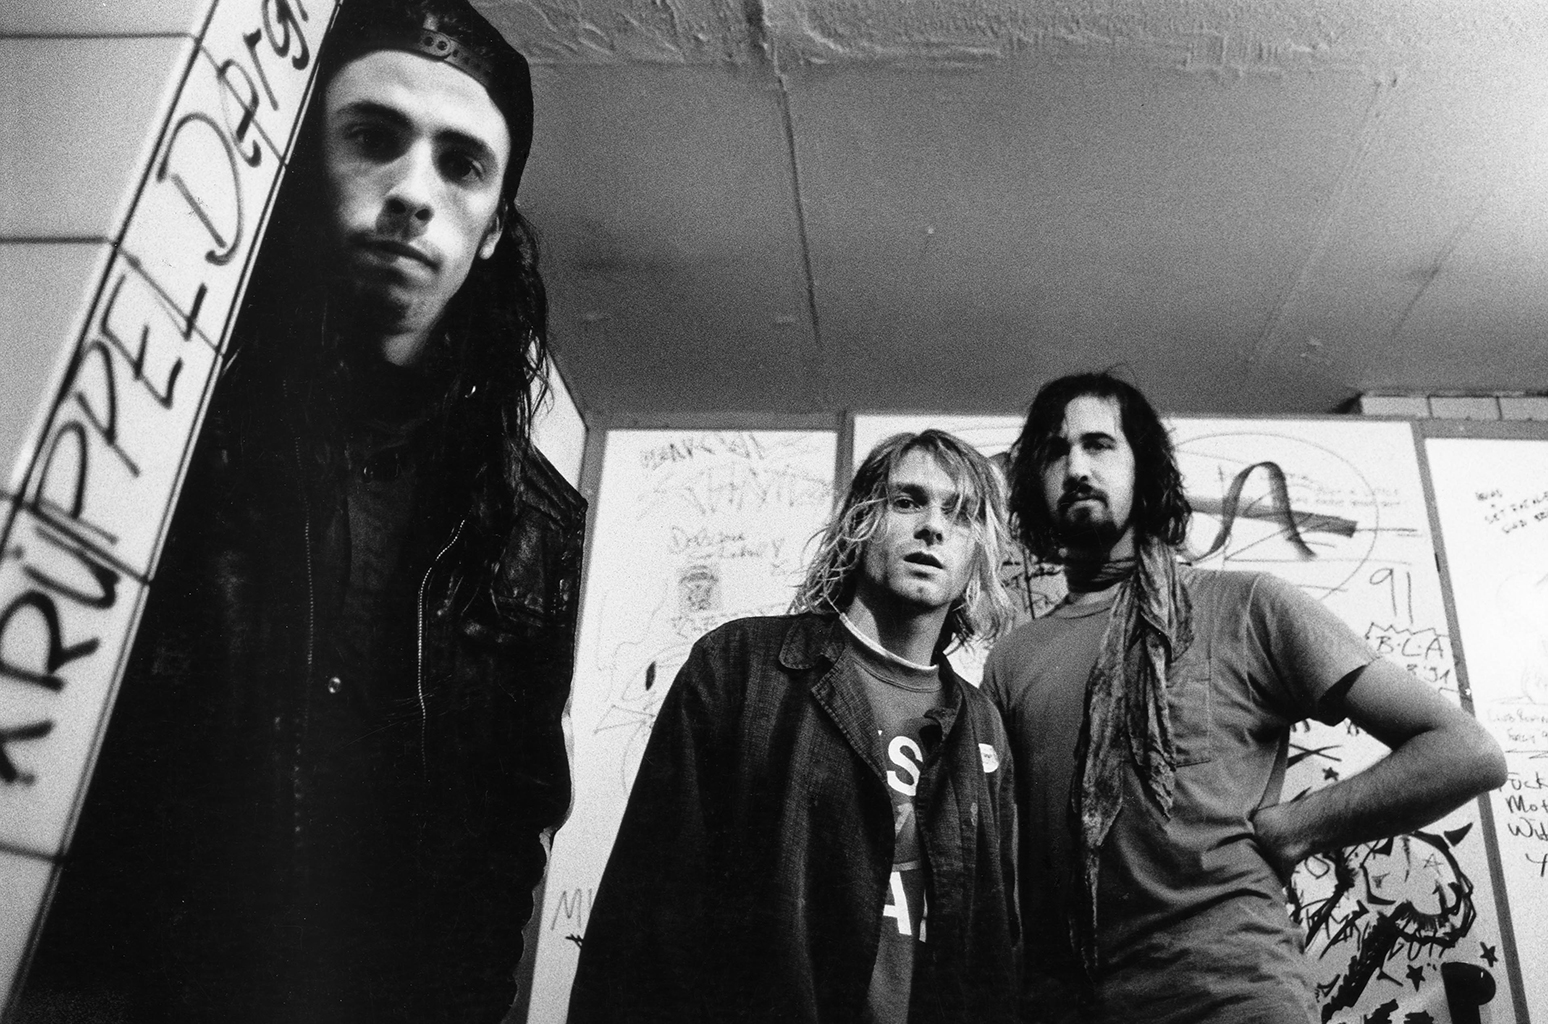 This Nirvana Video Just Hit 1 Billion Views on YouTube - www.billboard.com